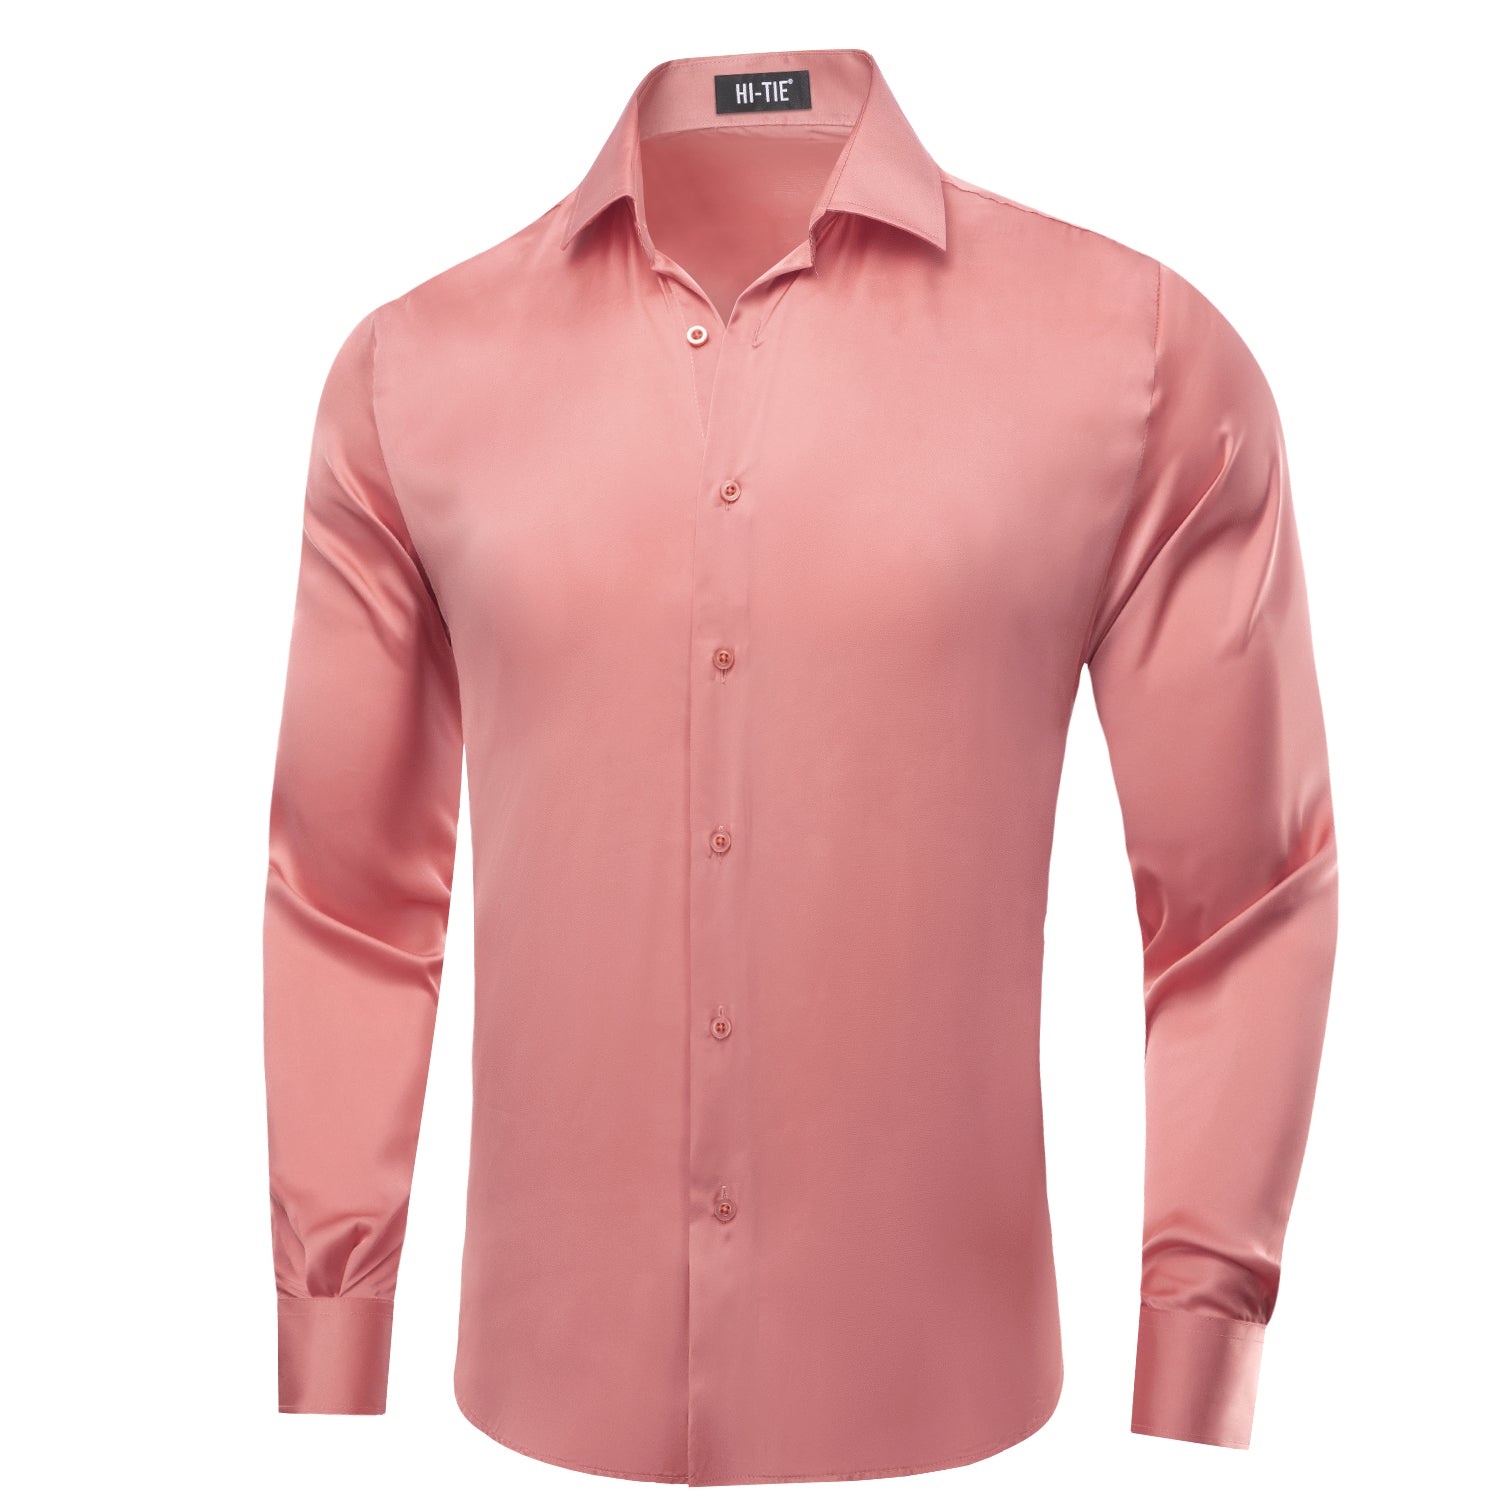 Rose Pink Solid Satin Chiffon Non-stretch Men's Long Sleeve Shirt